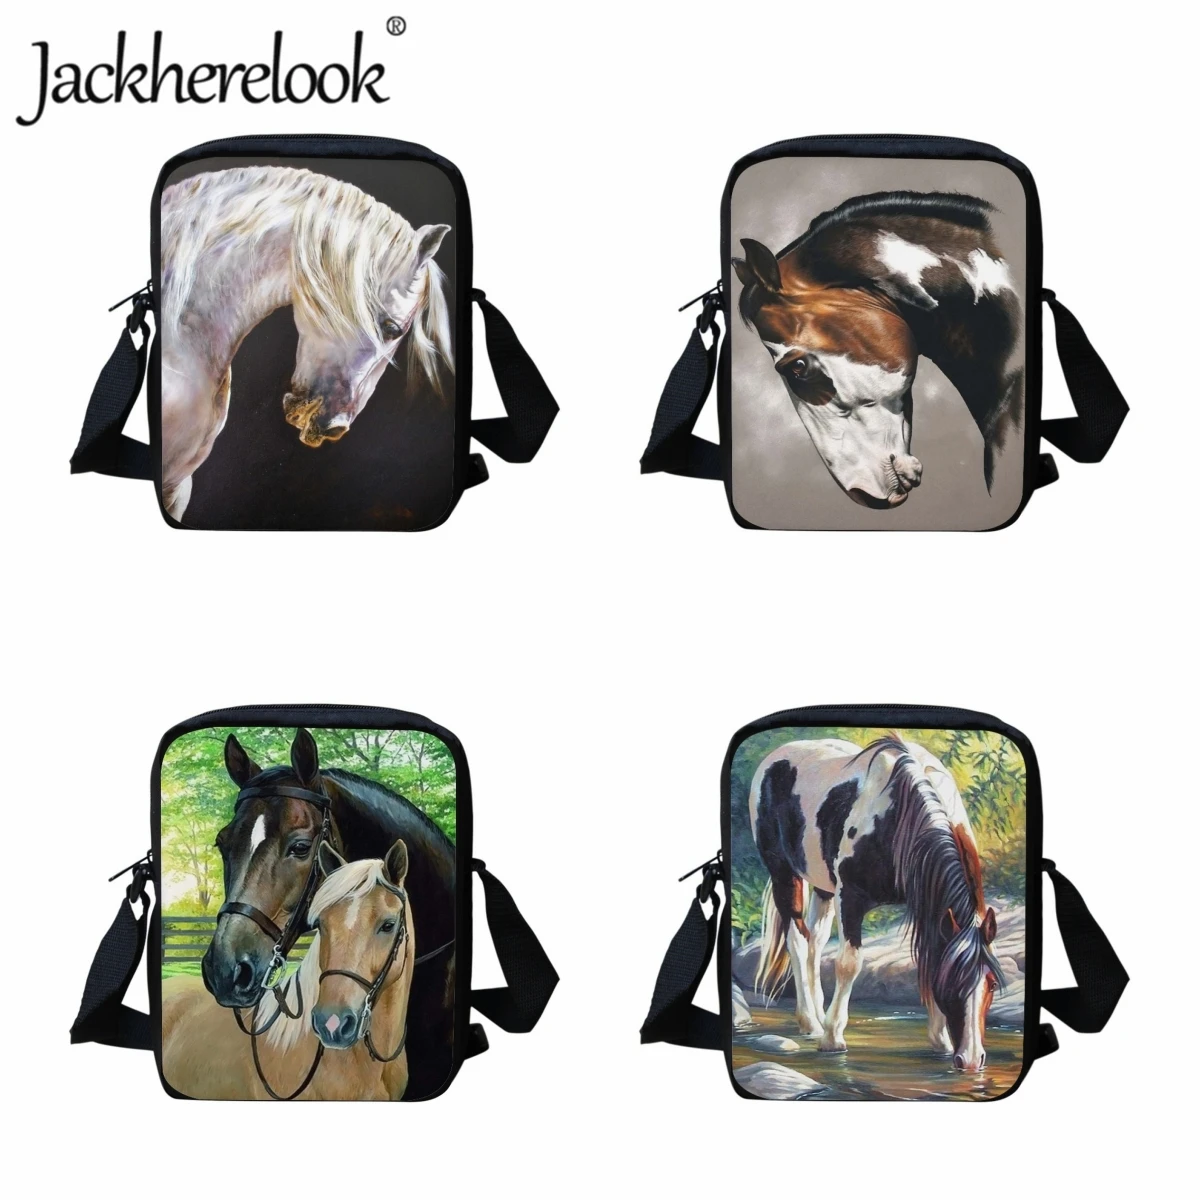 

Jackherelook Animal Print Kids School Lunch Bag Horse Pattern Fashion Children Messenger Bag Casual Travel Shoulder Shopping Bag